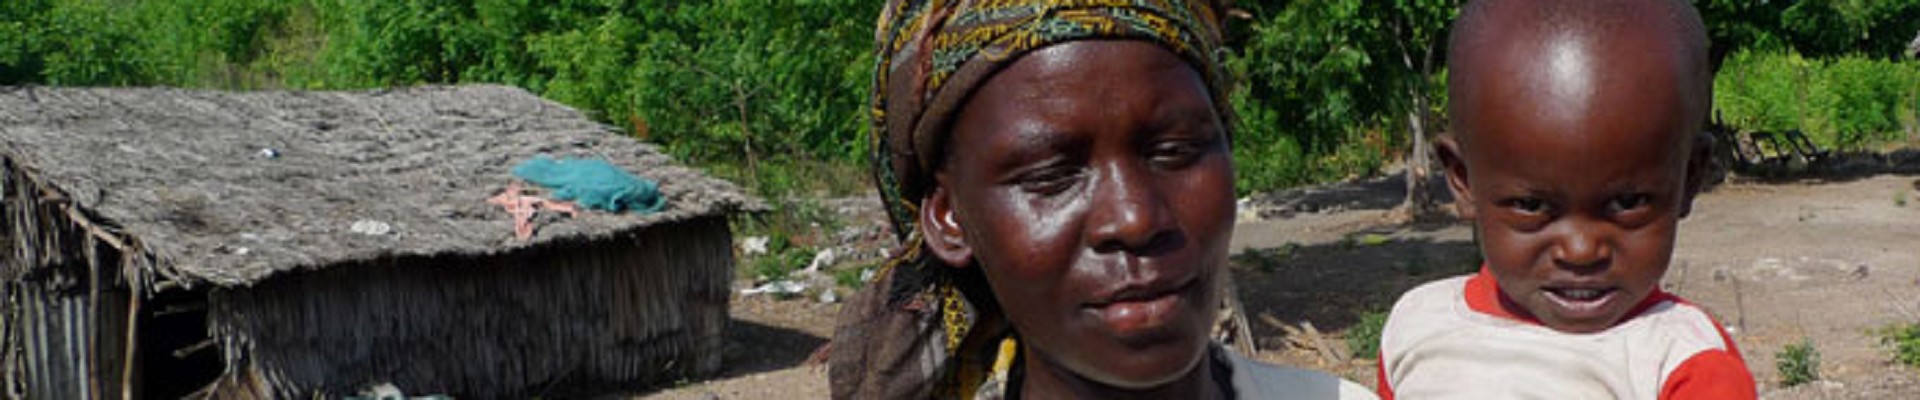 Missione e Carità Diocesi di Malindi Kenya  | Adozione a Distanza Bambini | Costruzione Ospedale Missione di Watamu 